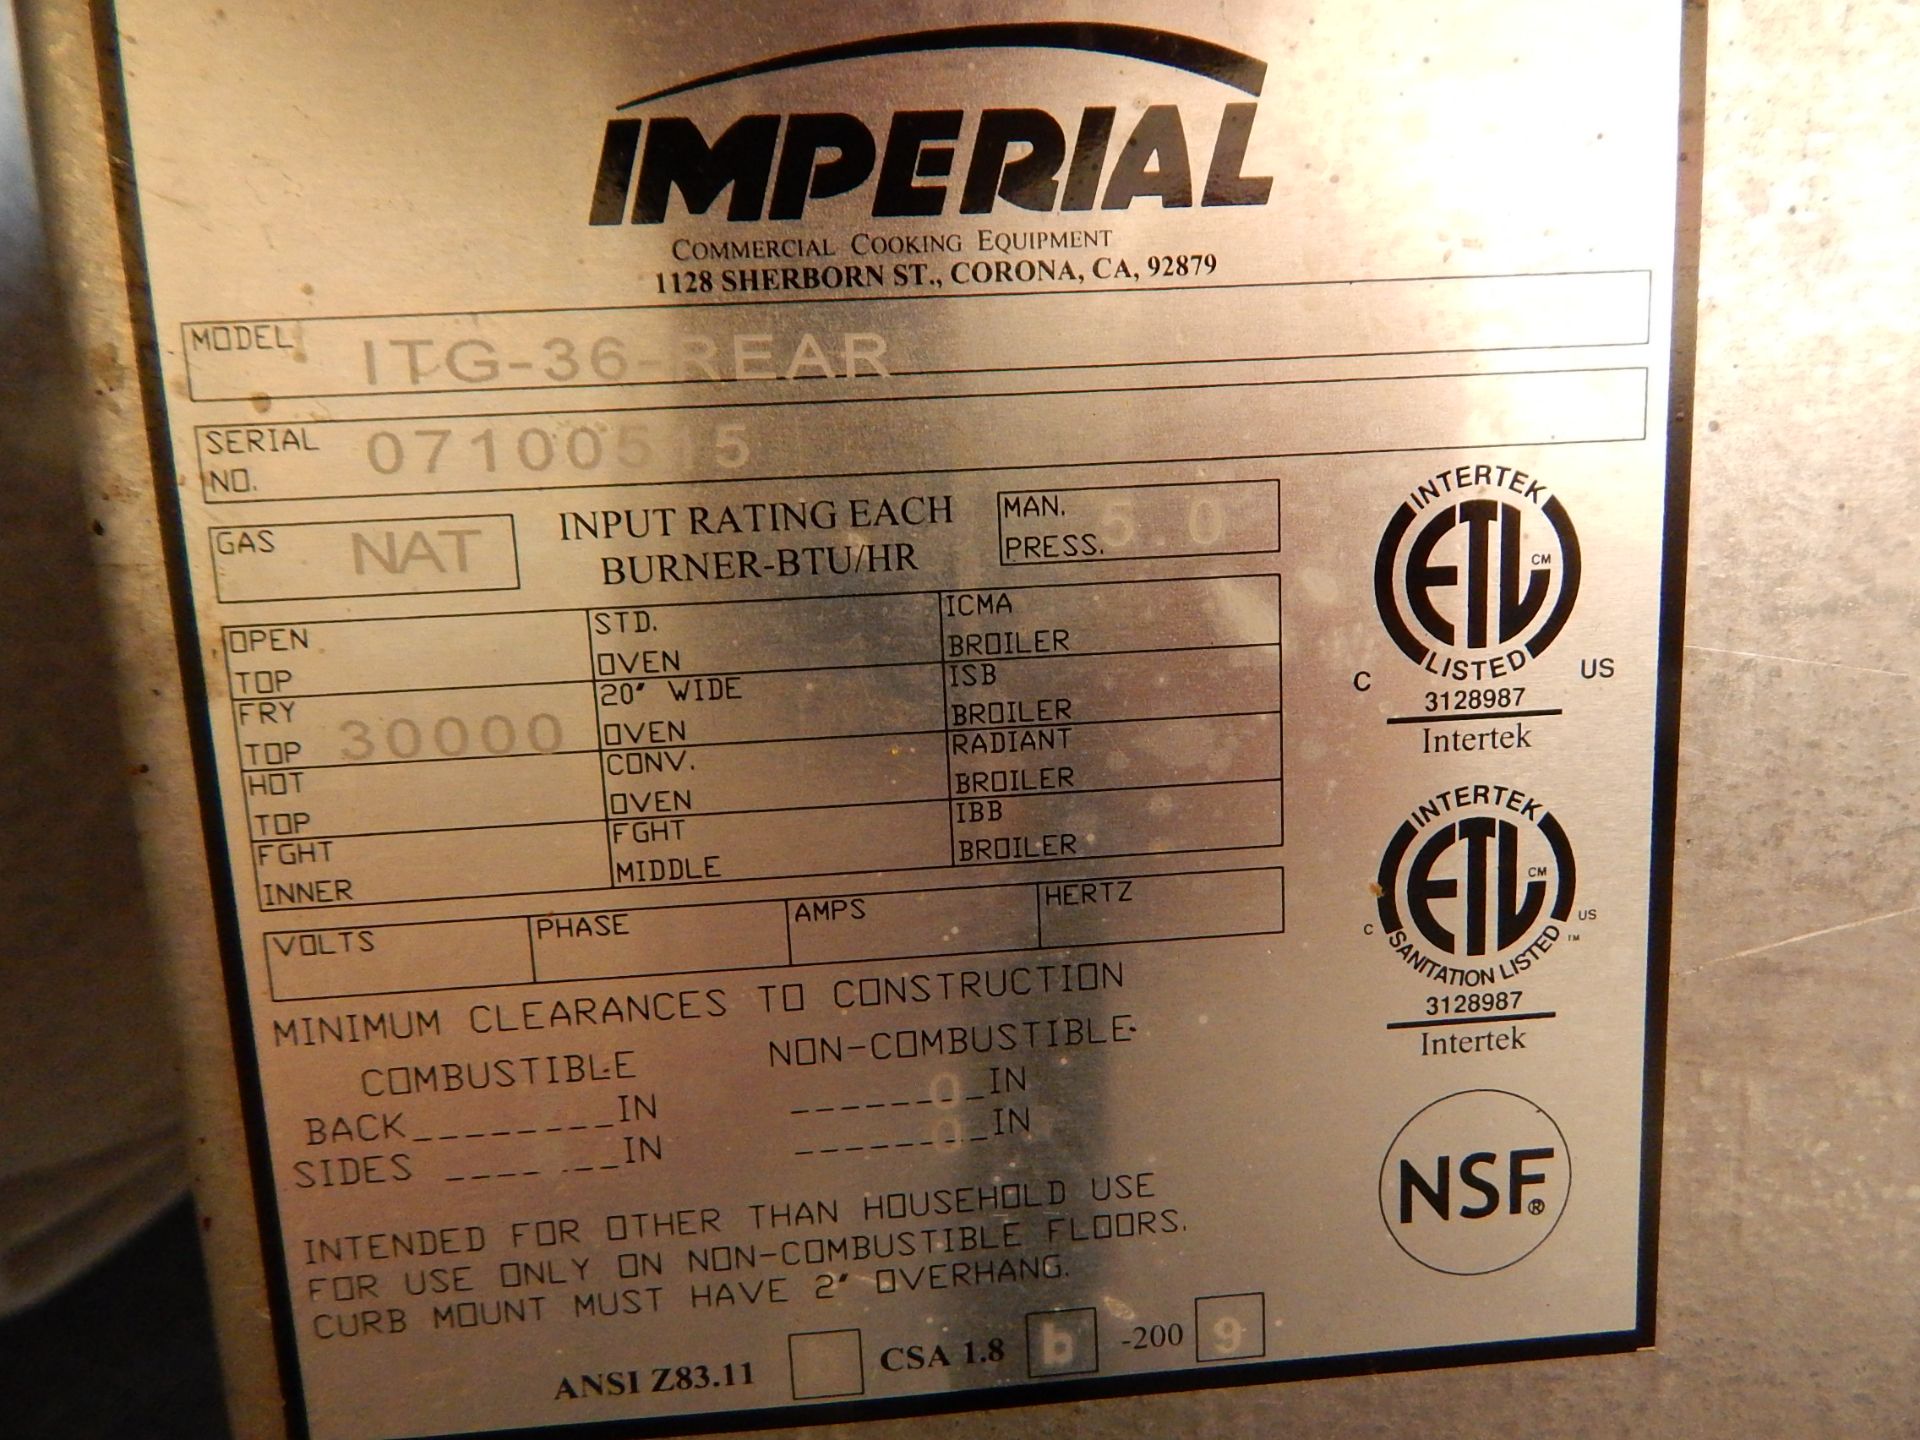 Imperial Model ITG-36-REAR 36" Flat Top Gas Griddle, SN 07100515 - Bild 6 aus 7